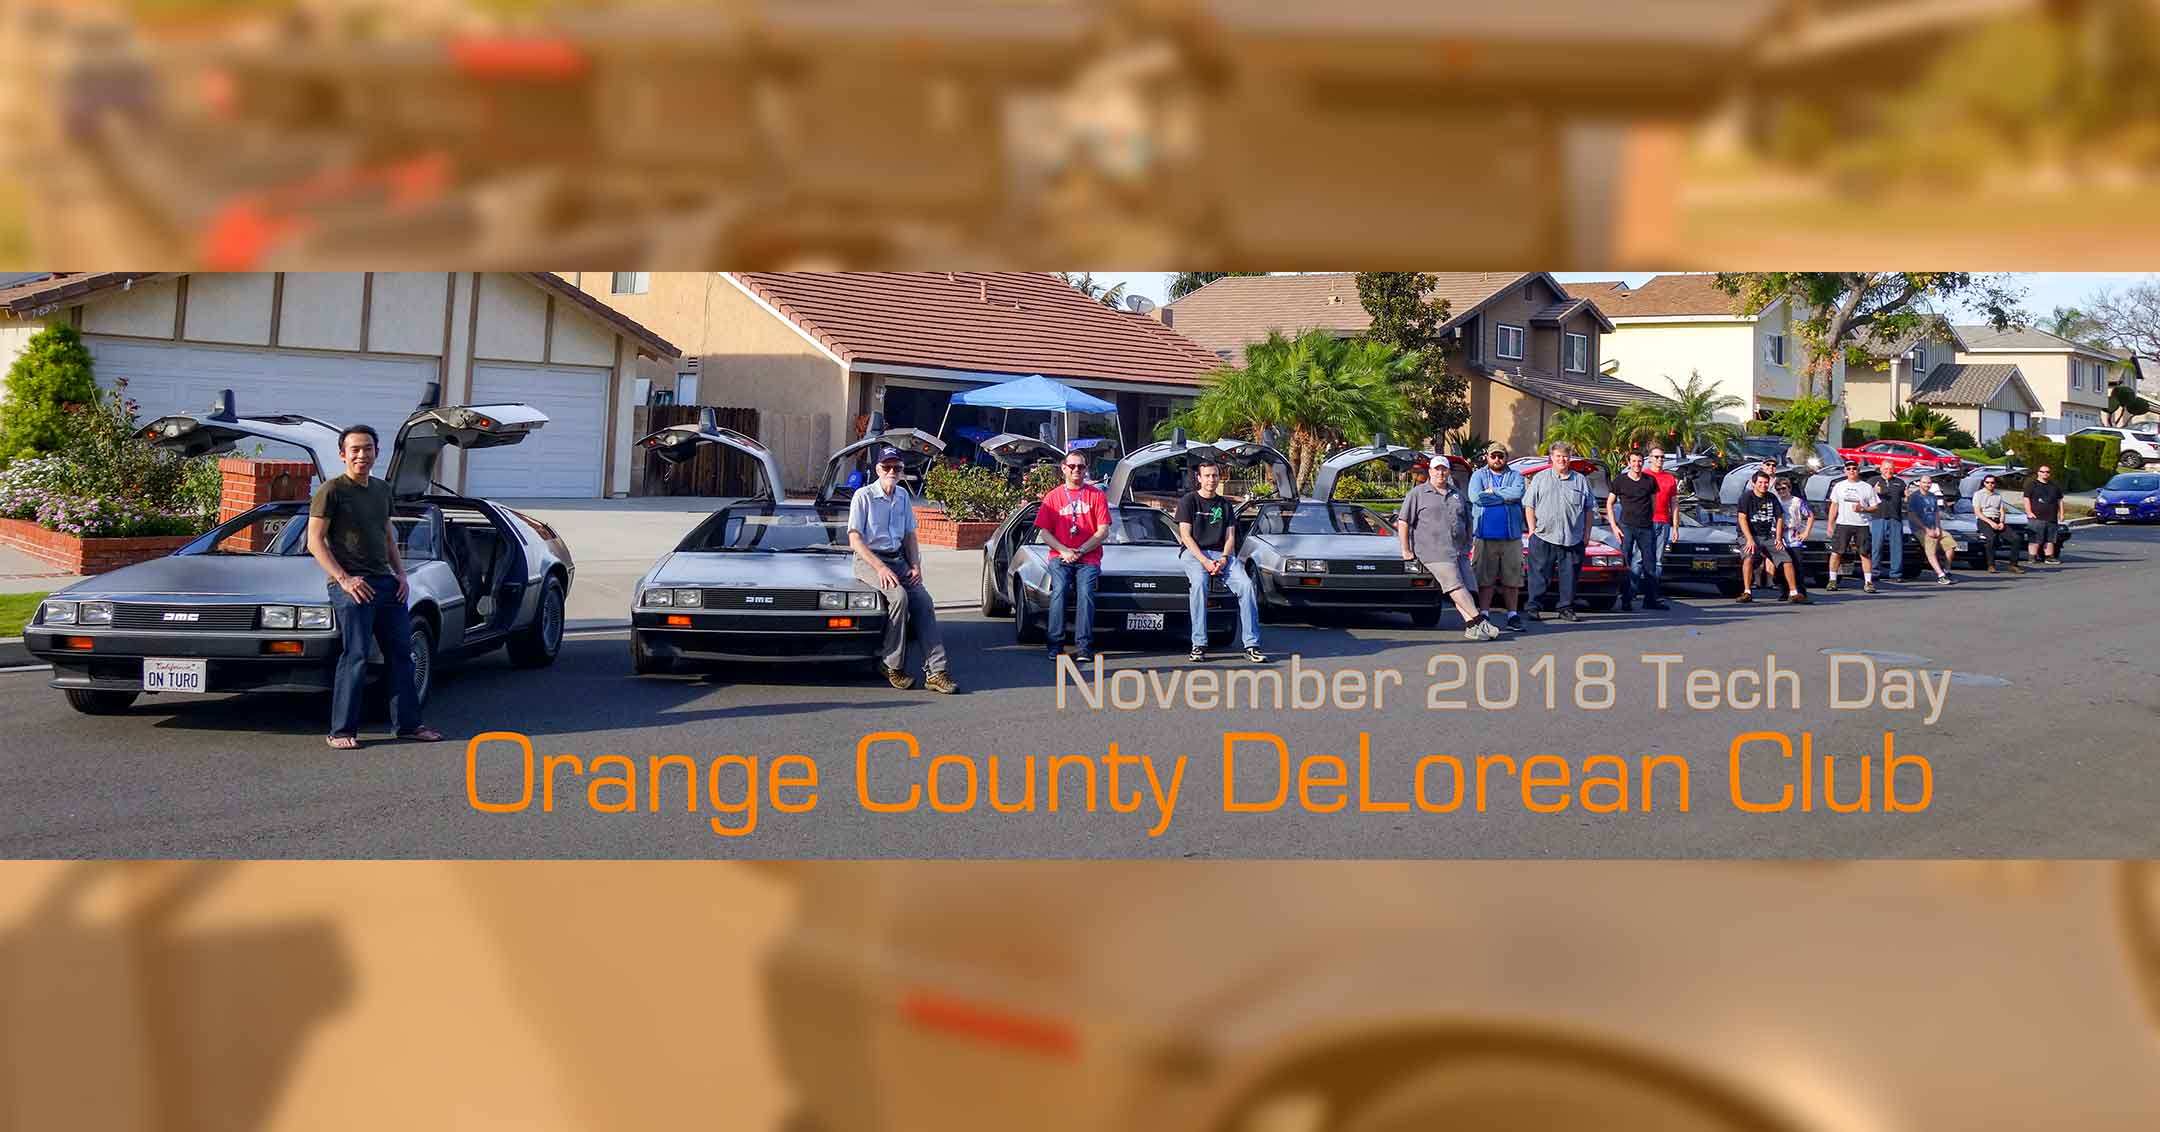 Orange County DeLorean Club November 2018 Tech Day | OCDeLoreans.com